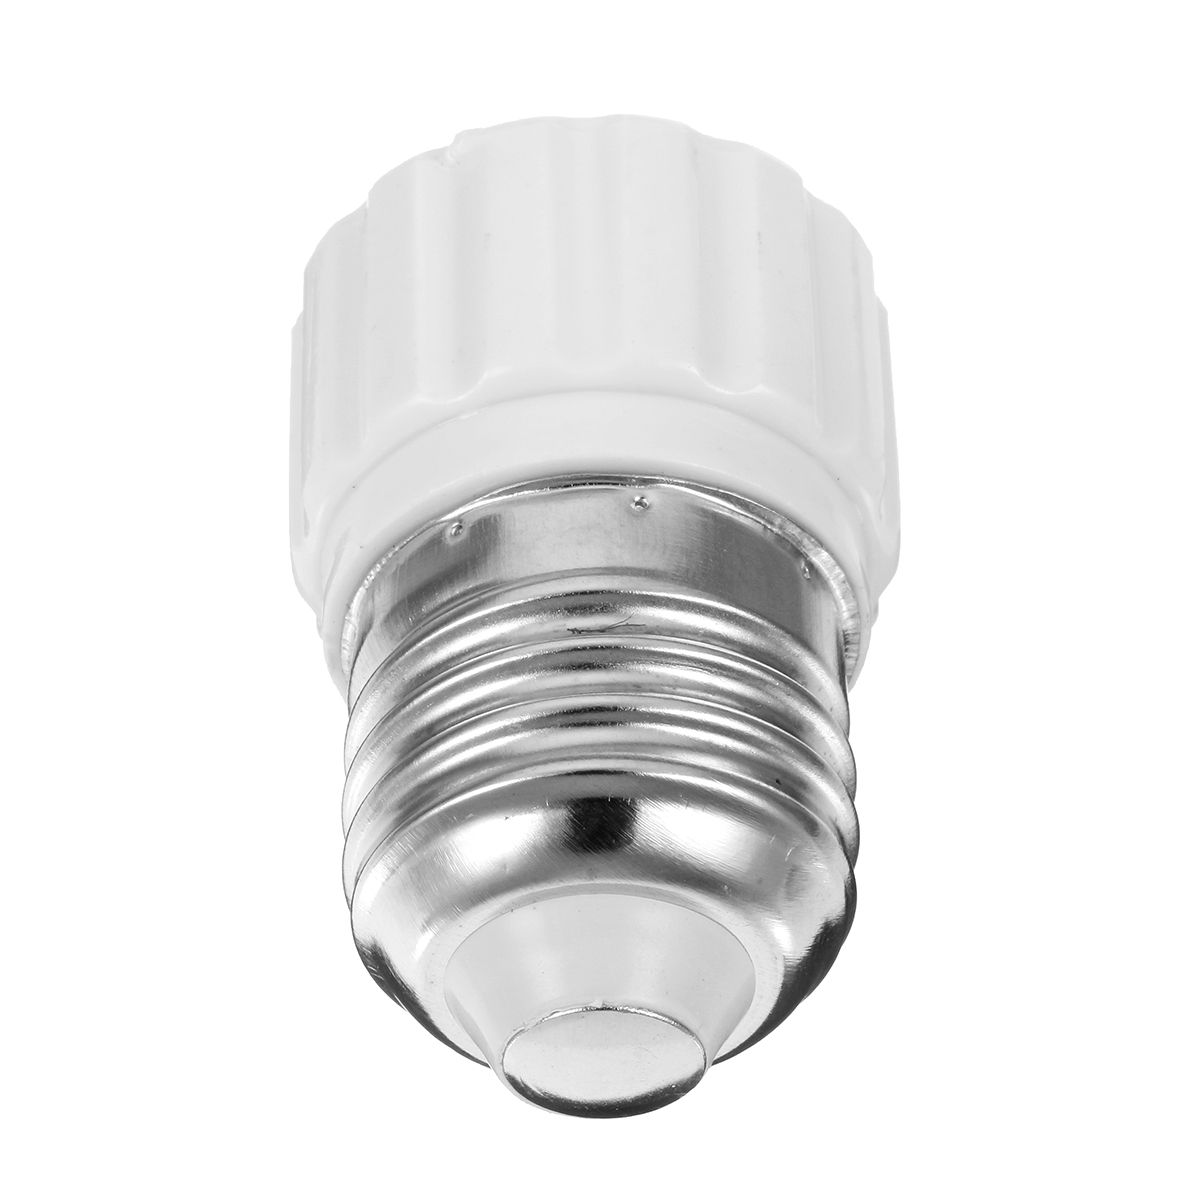 5PCS-E27-to-GU10-Light-Lamp-Bulb-Adapter-Converter-1372911